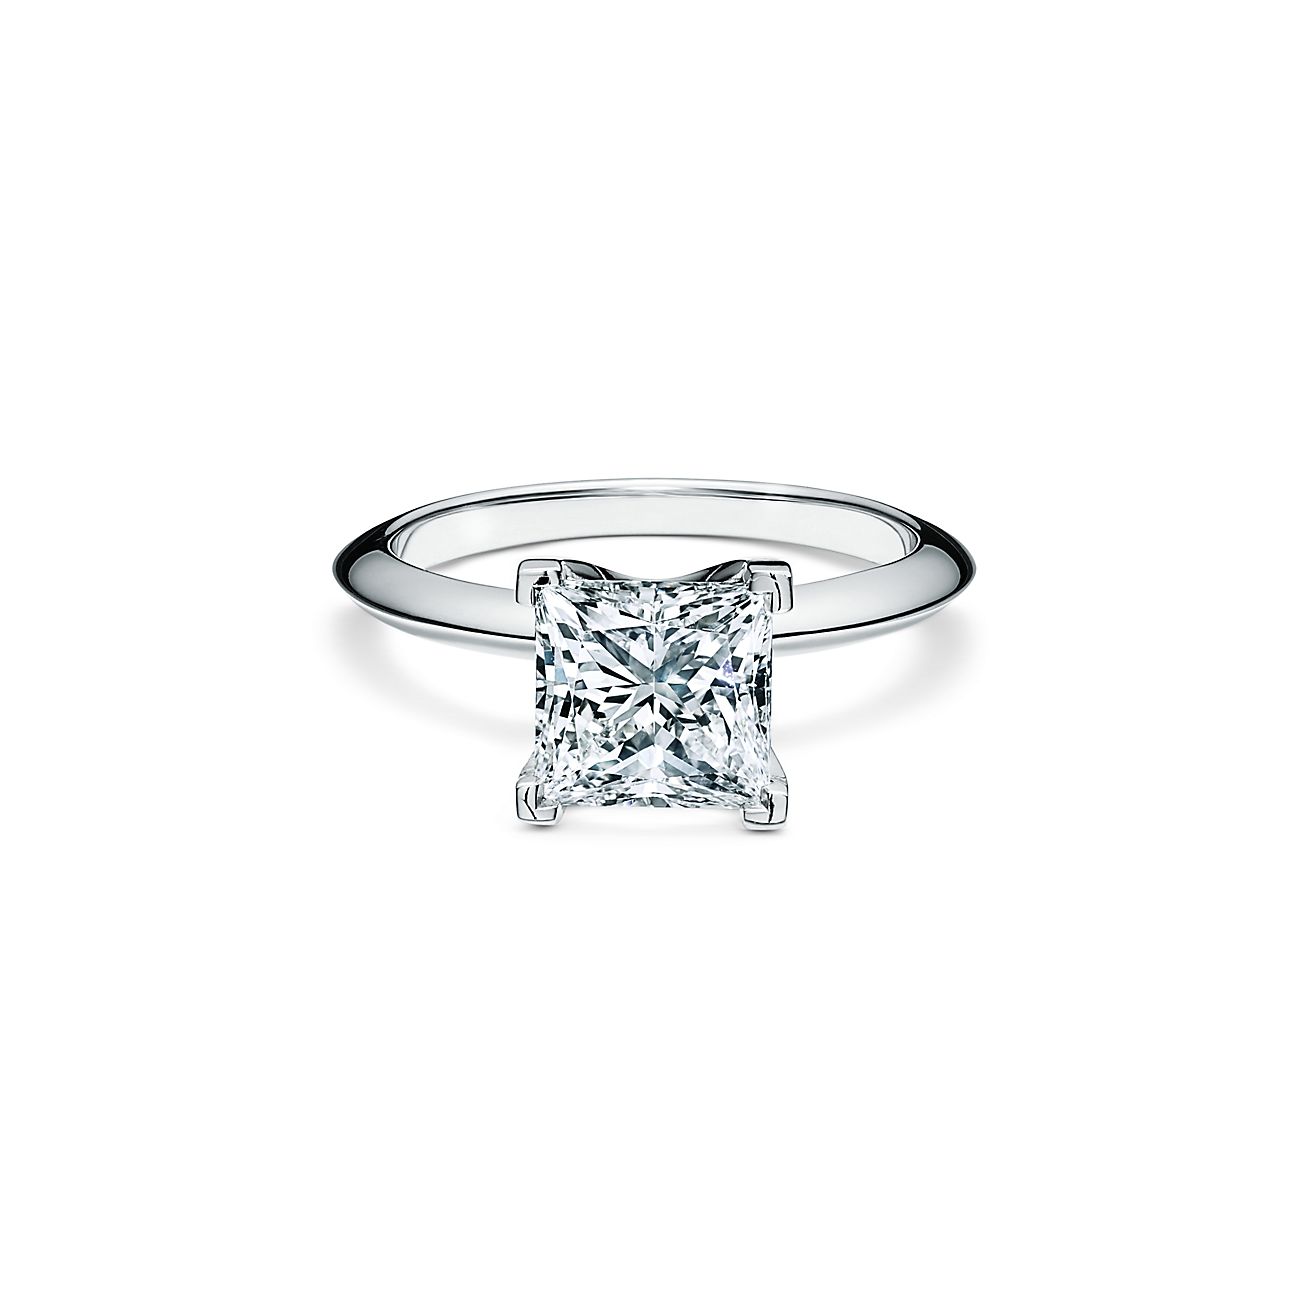 Gift Box Included 1/2 cttw, H-I, VS2-SI1 | Real Diamond Rings for Women Platinum Princess-Cut Diamond Bridal Wedding Band Ring 